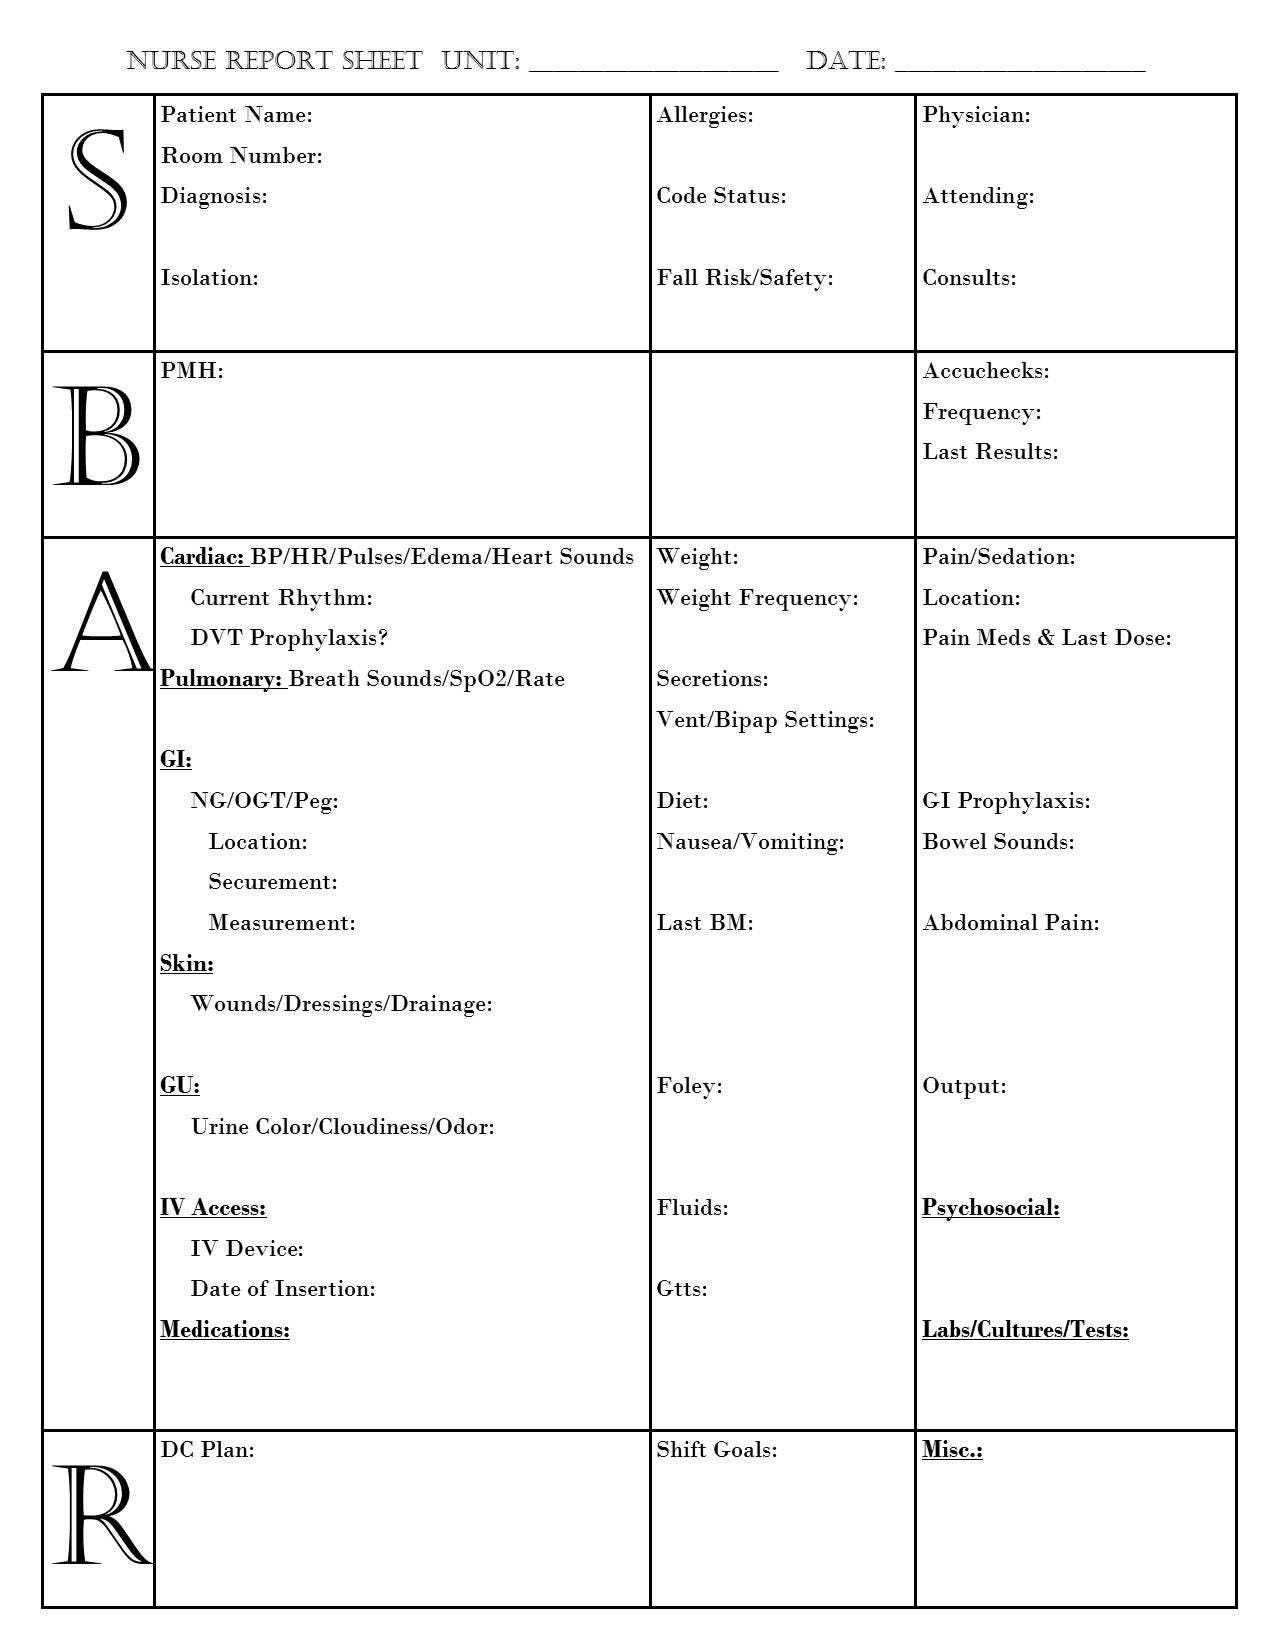 Sbar template free printable Inside Nursing Report Sheet Templates